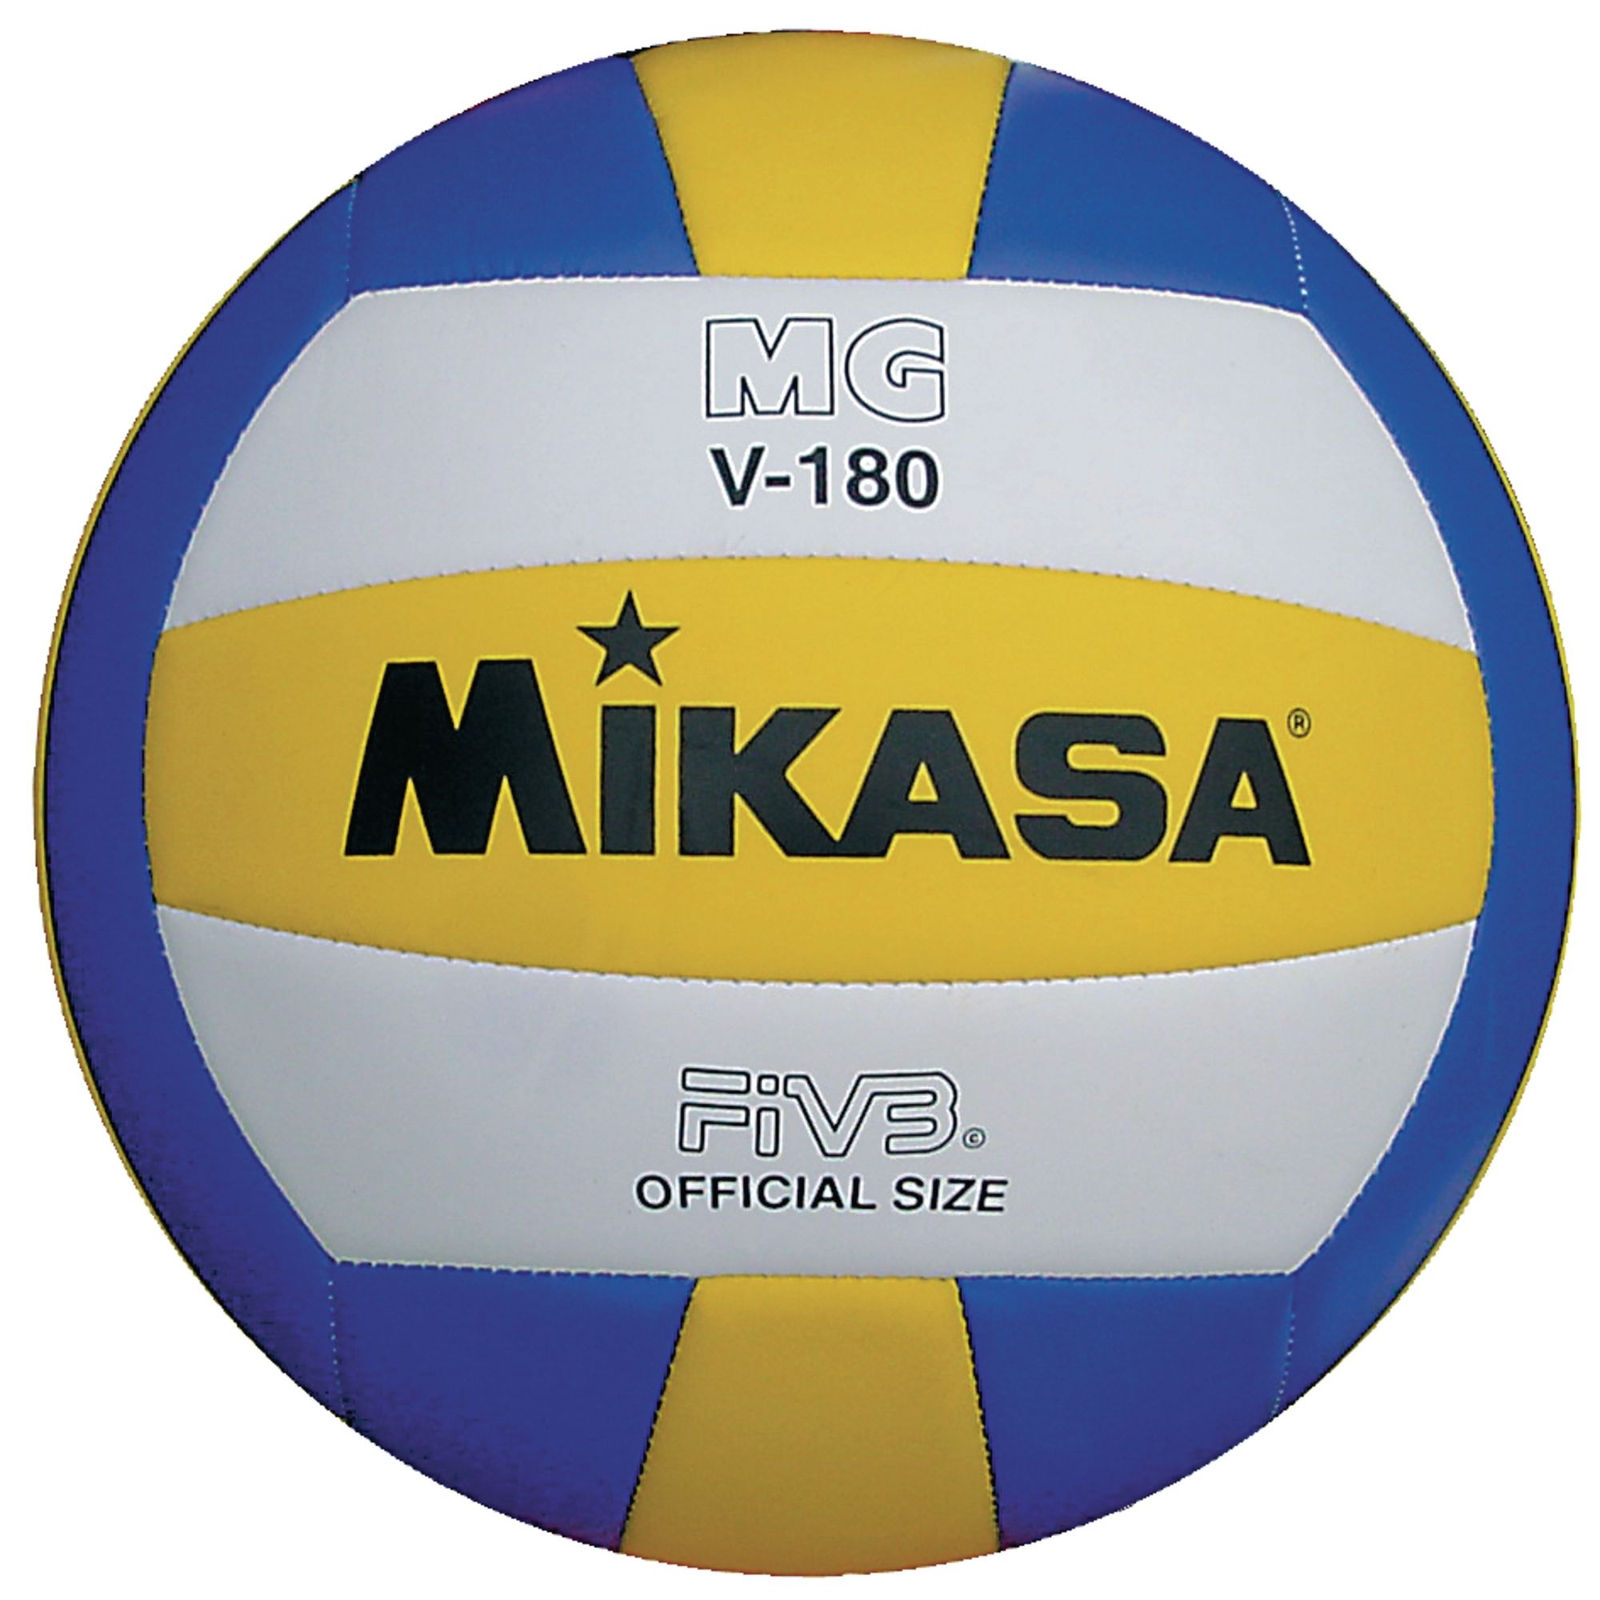 Mikasa MGV Volleyball - 180g